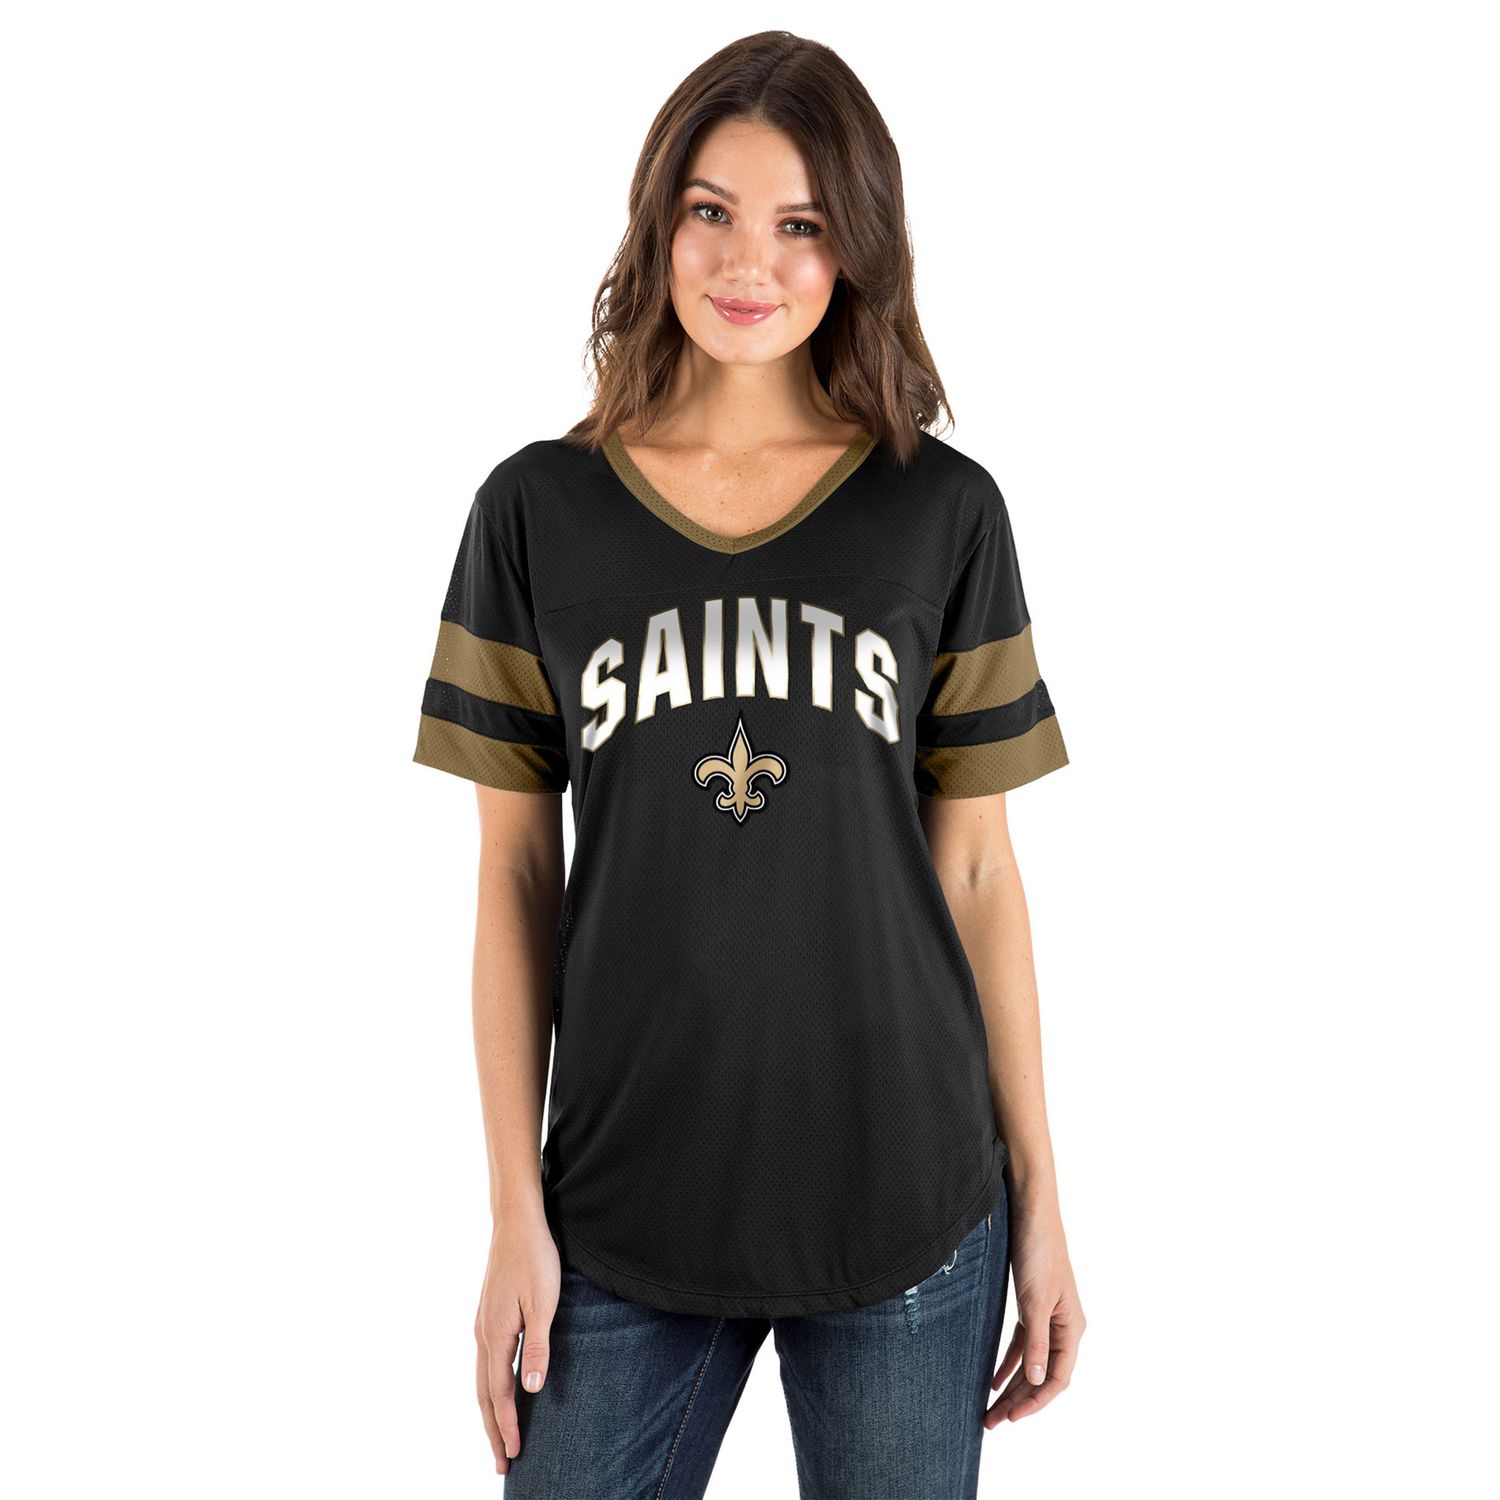 saints shirts for women